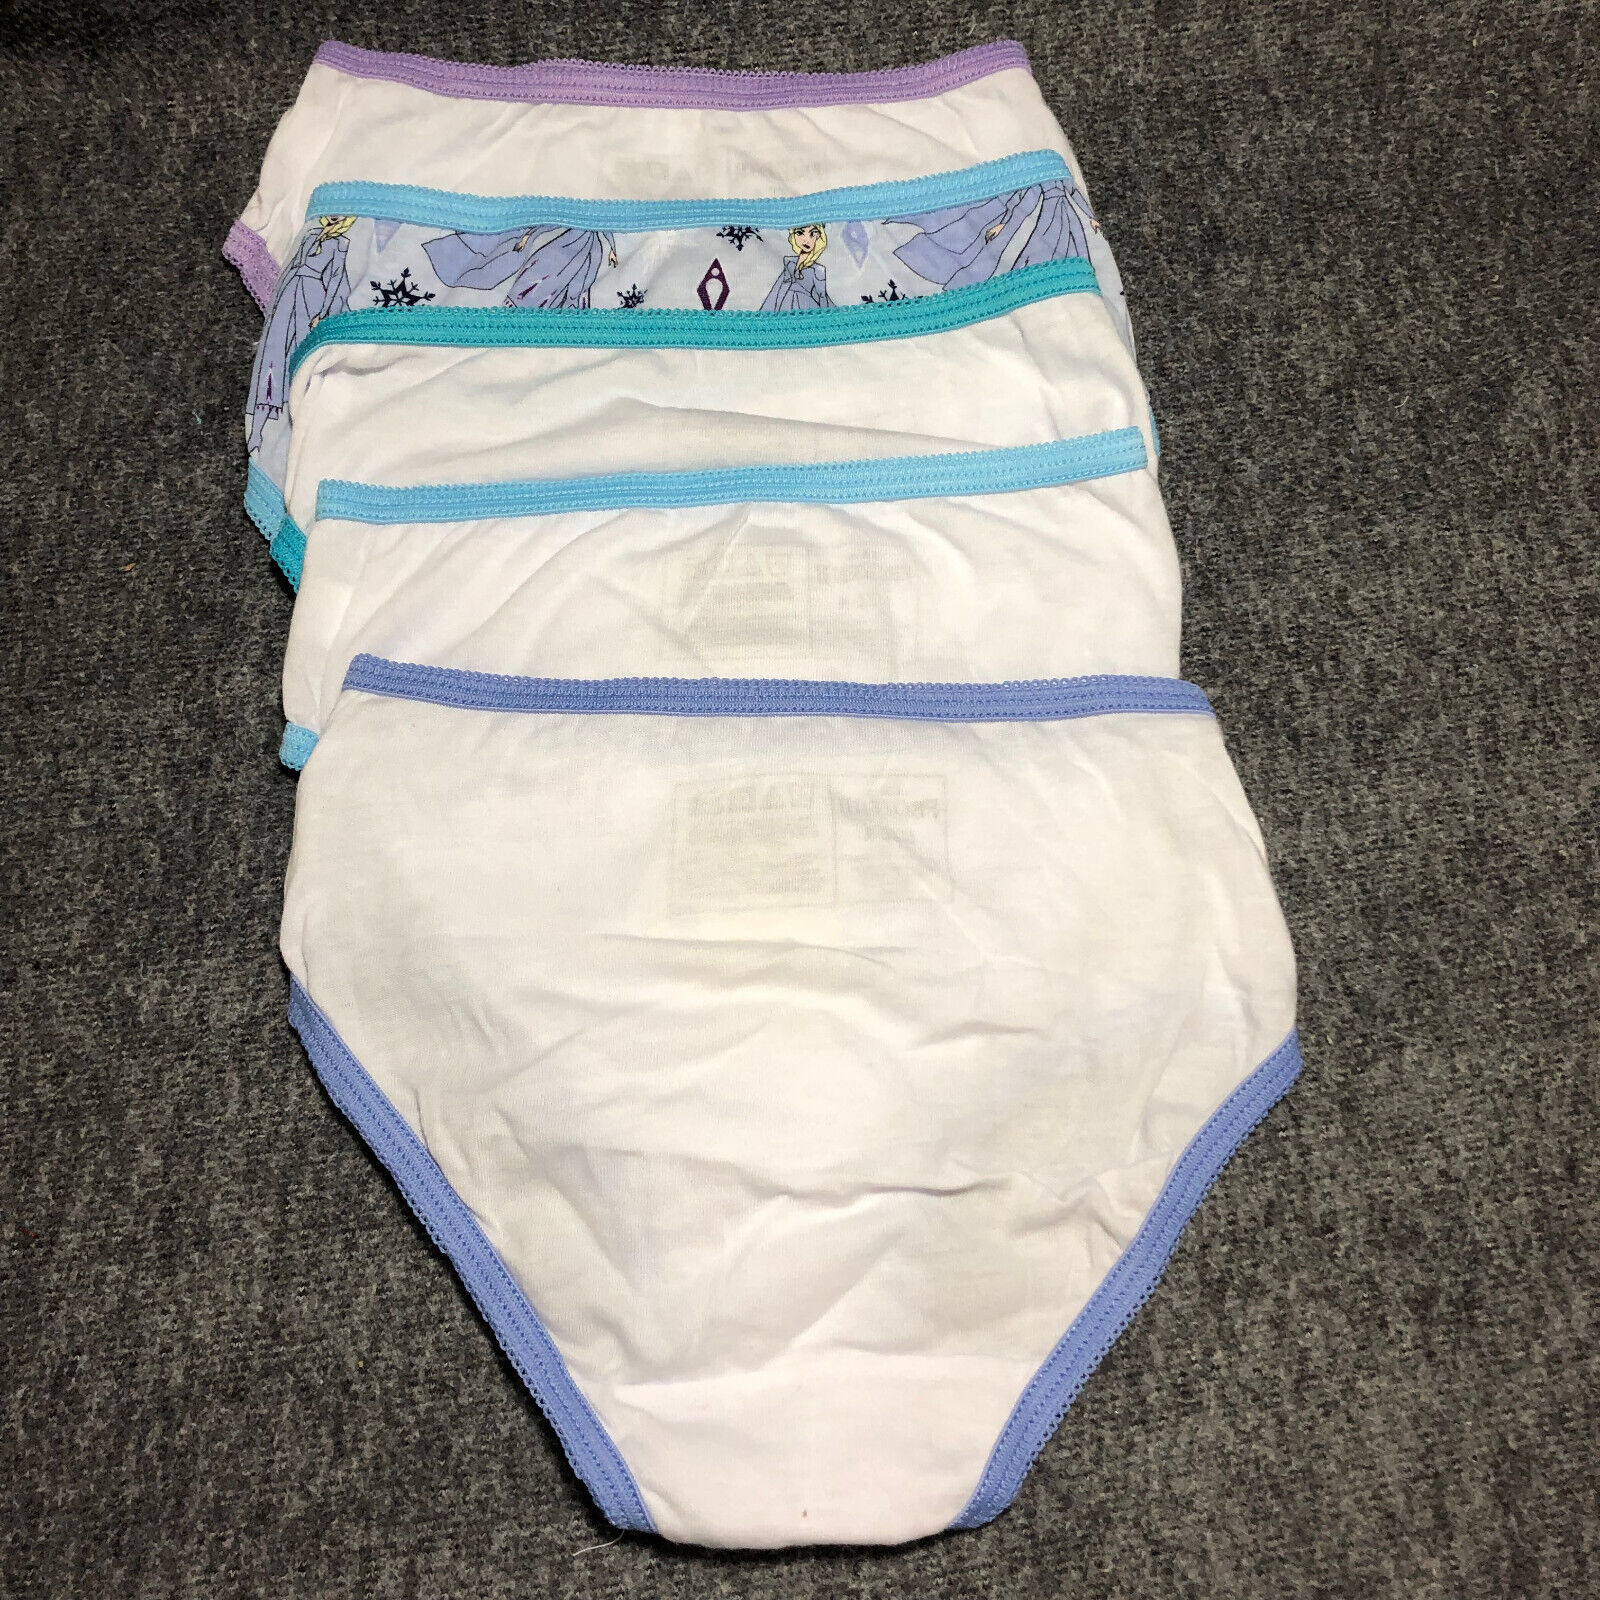 DISNEY FROZEN 2 - Girls Size 4T Underwear Panties Briefs 7 Pair Anna Elsa  Olaf $9.99 - PicClick